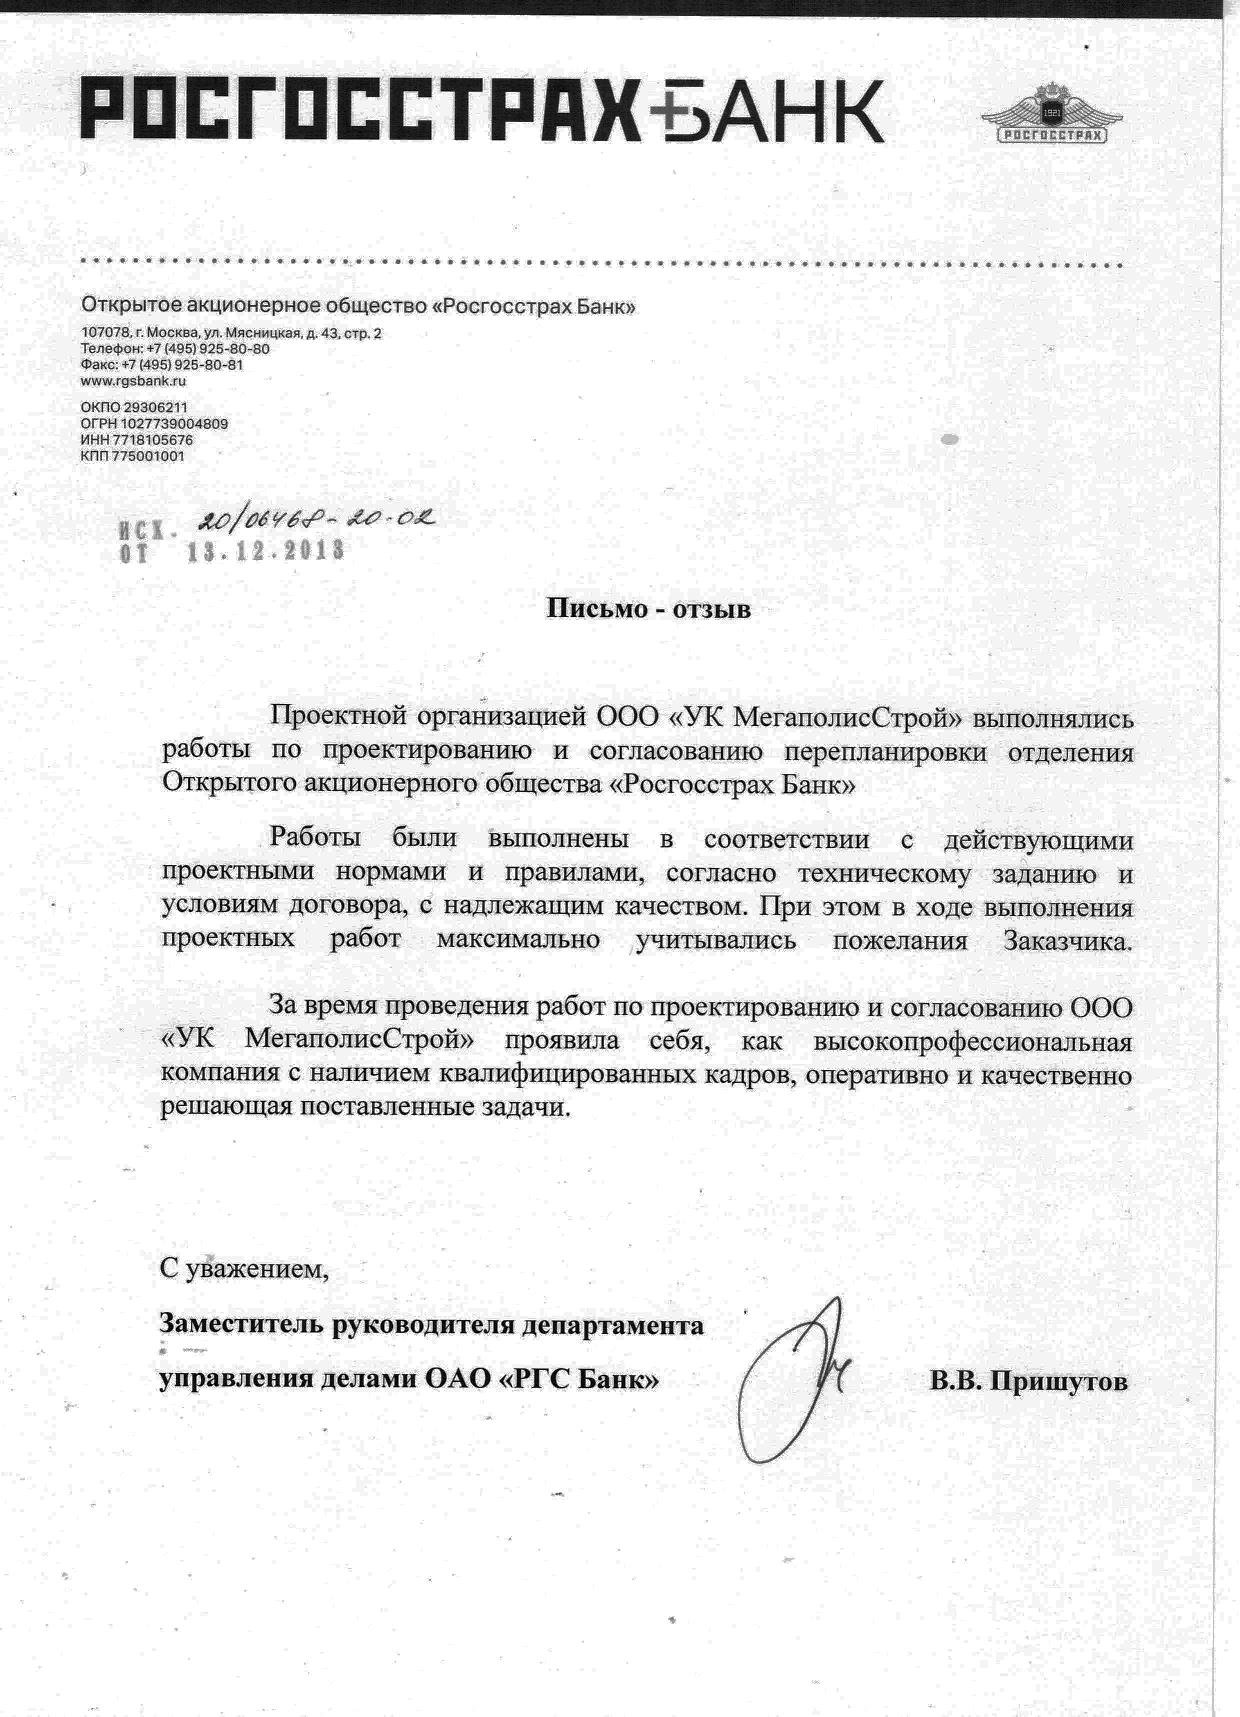 Письмо-отзыв ОАО РГС Банк